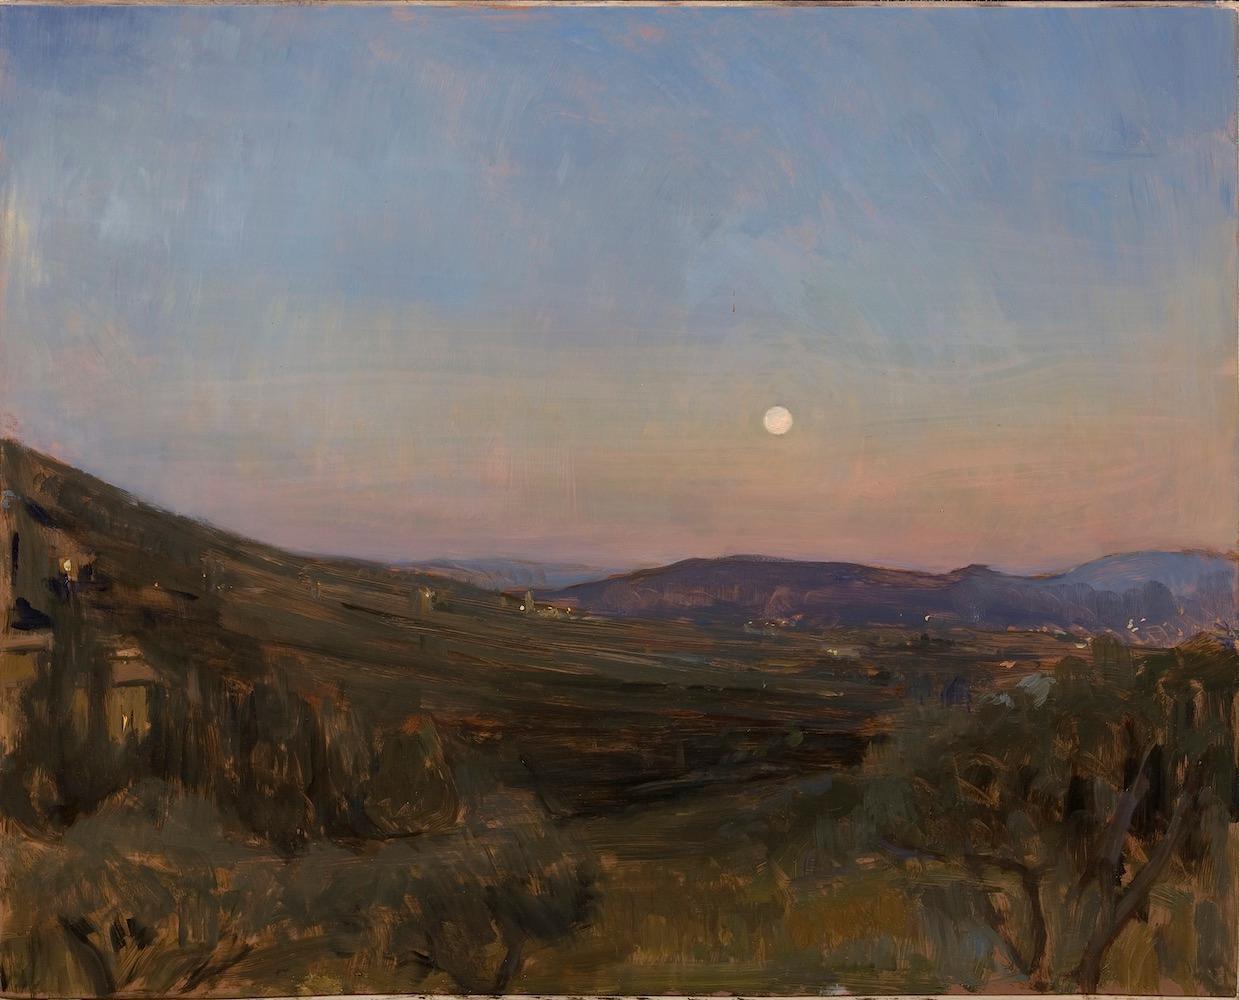 Melissa Franklin Sanchez Landscape Painting - "Moonrise over San Domenico" contemporary realist painting, Italian Hillside